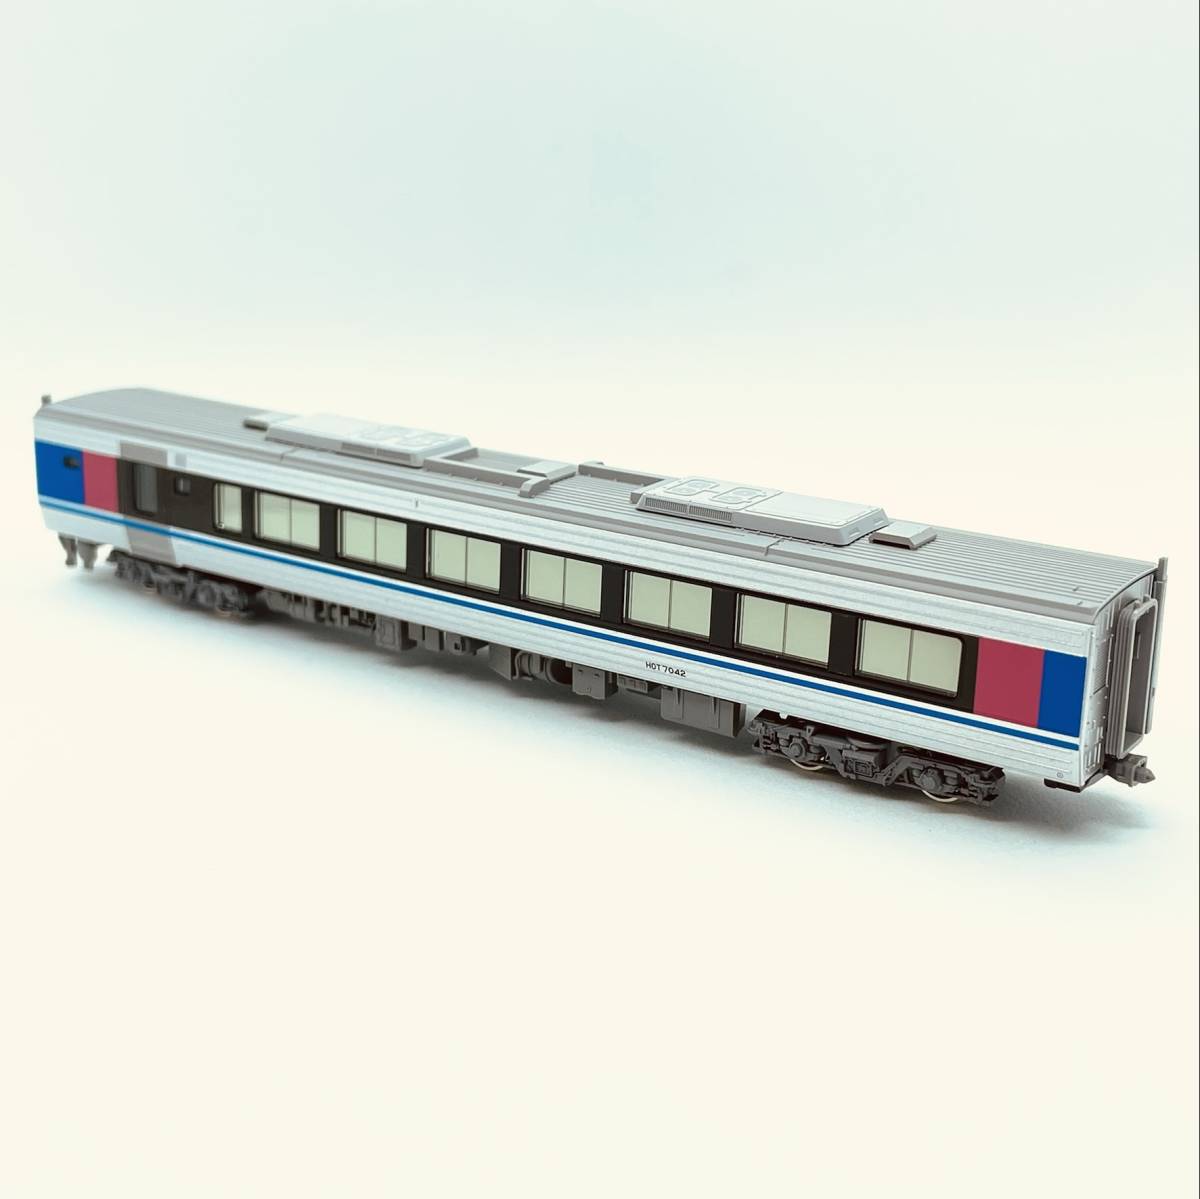 新品】 KATO HOT7000系 Assyパーツ一式 HOT7042(T車) + 6両 - 鉄道模型 - alrc.asia